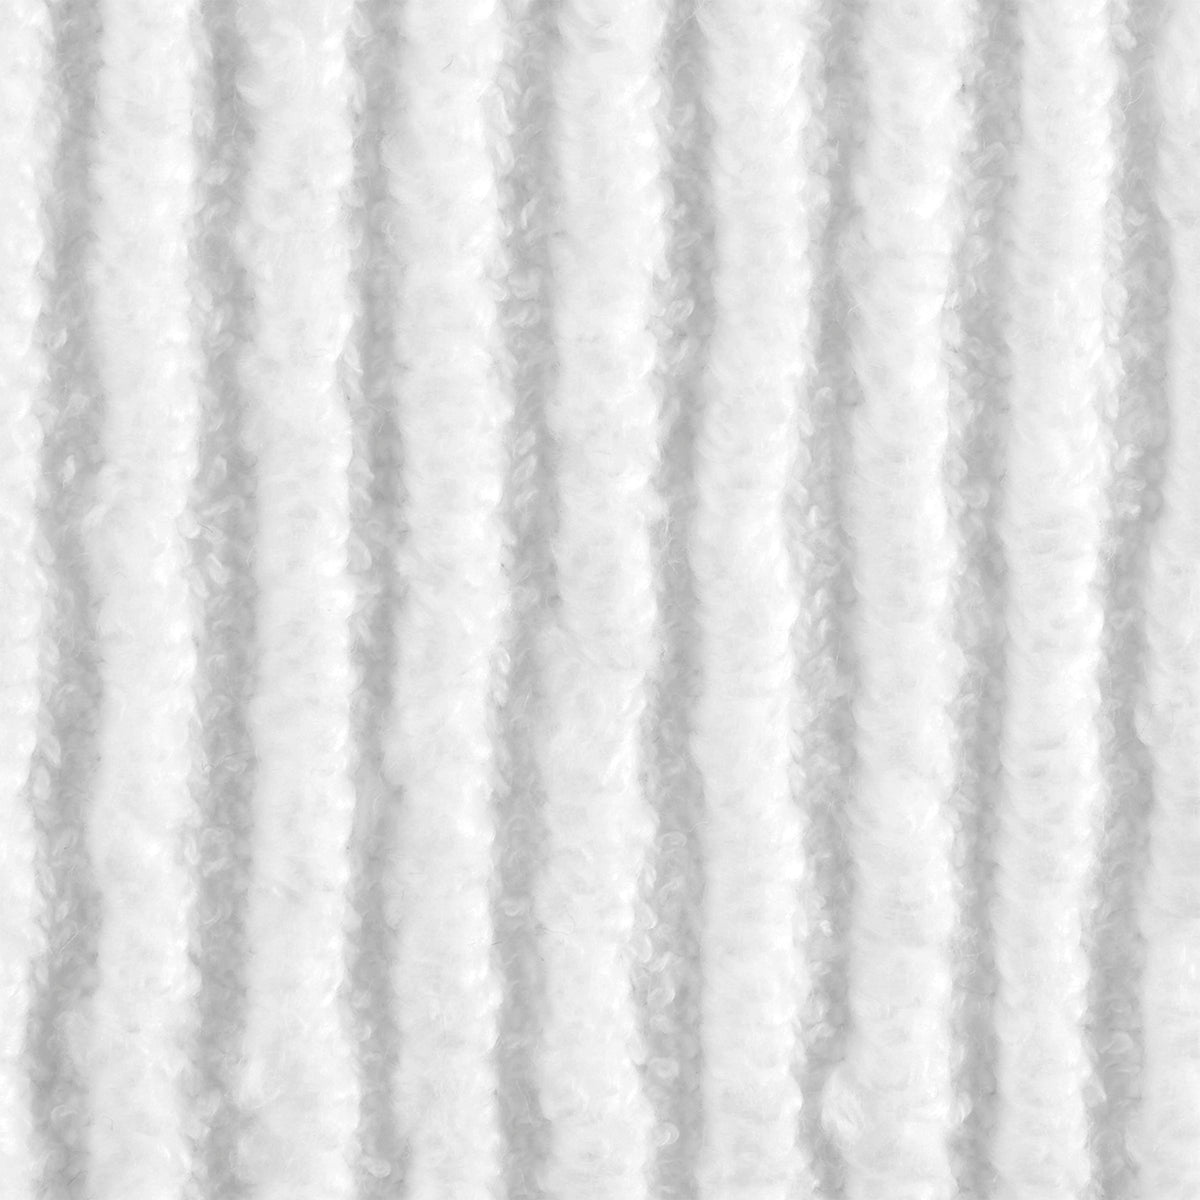 Swatch Sample of Matouk Aman Bath Tub Mat in White Color